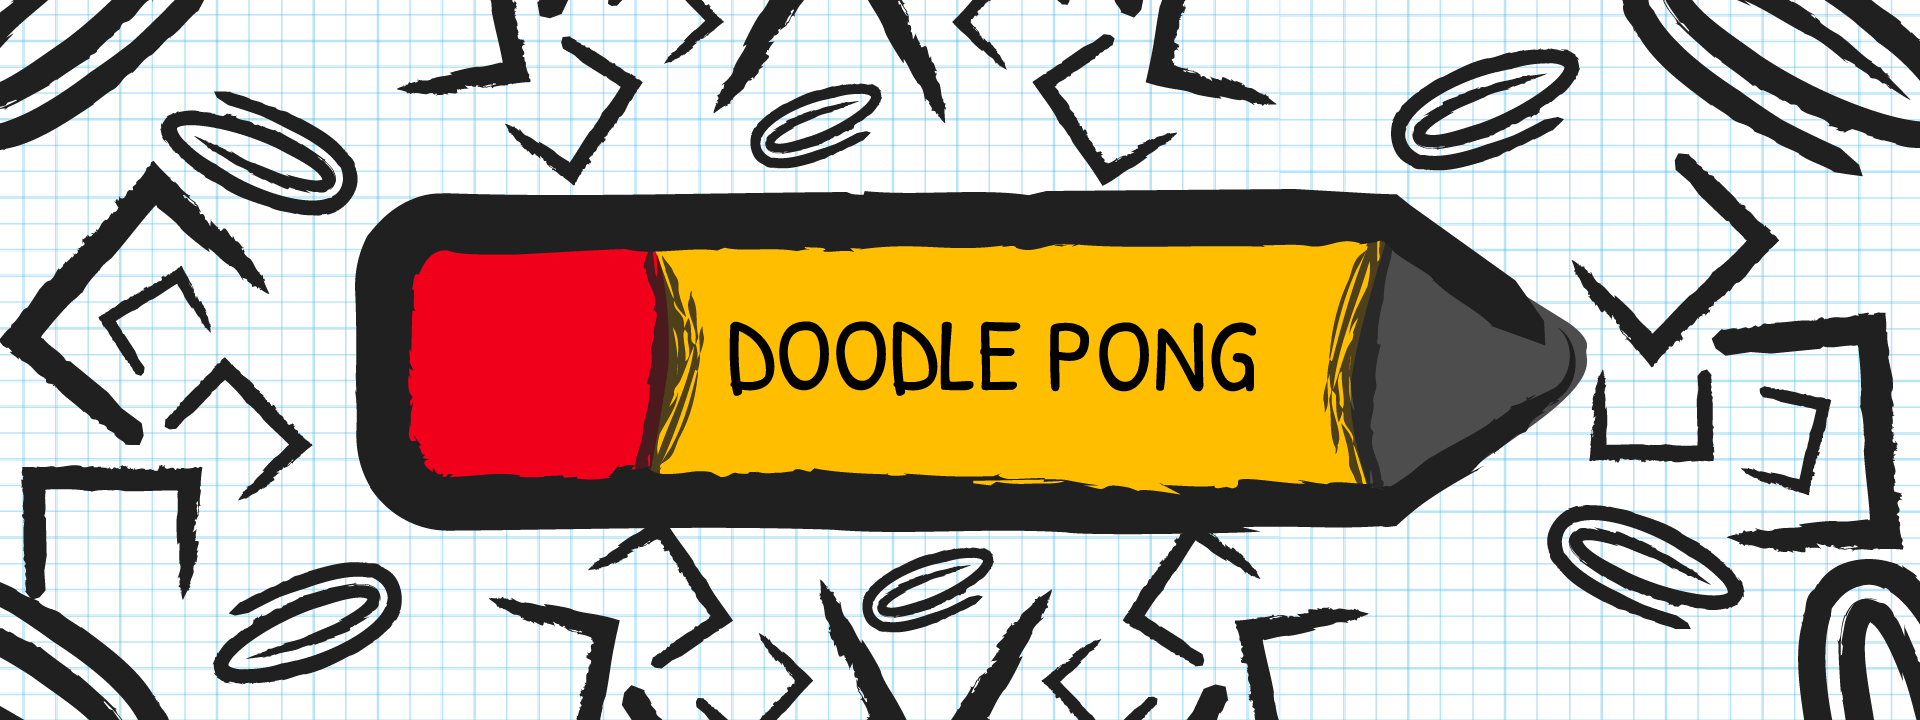 Doodle Pong